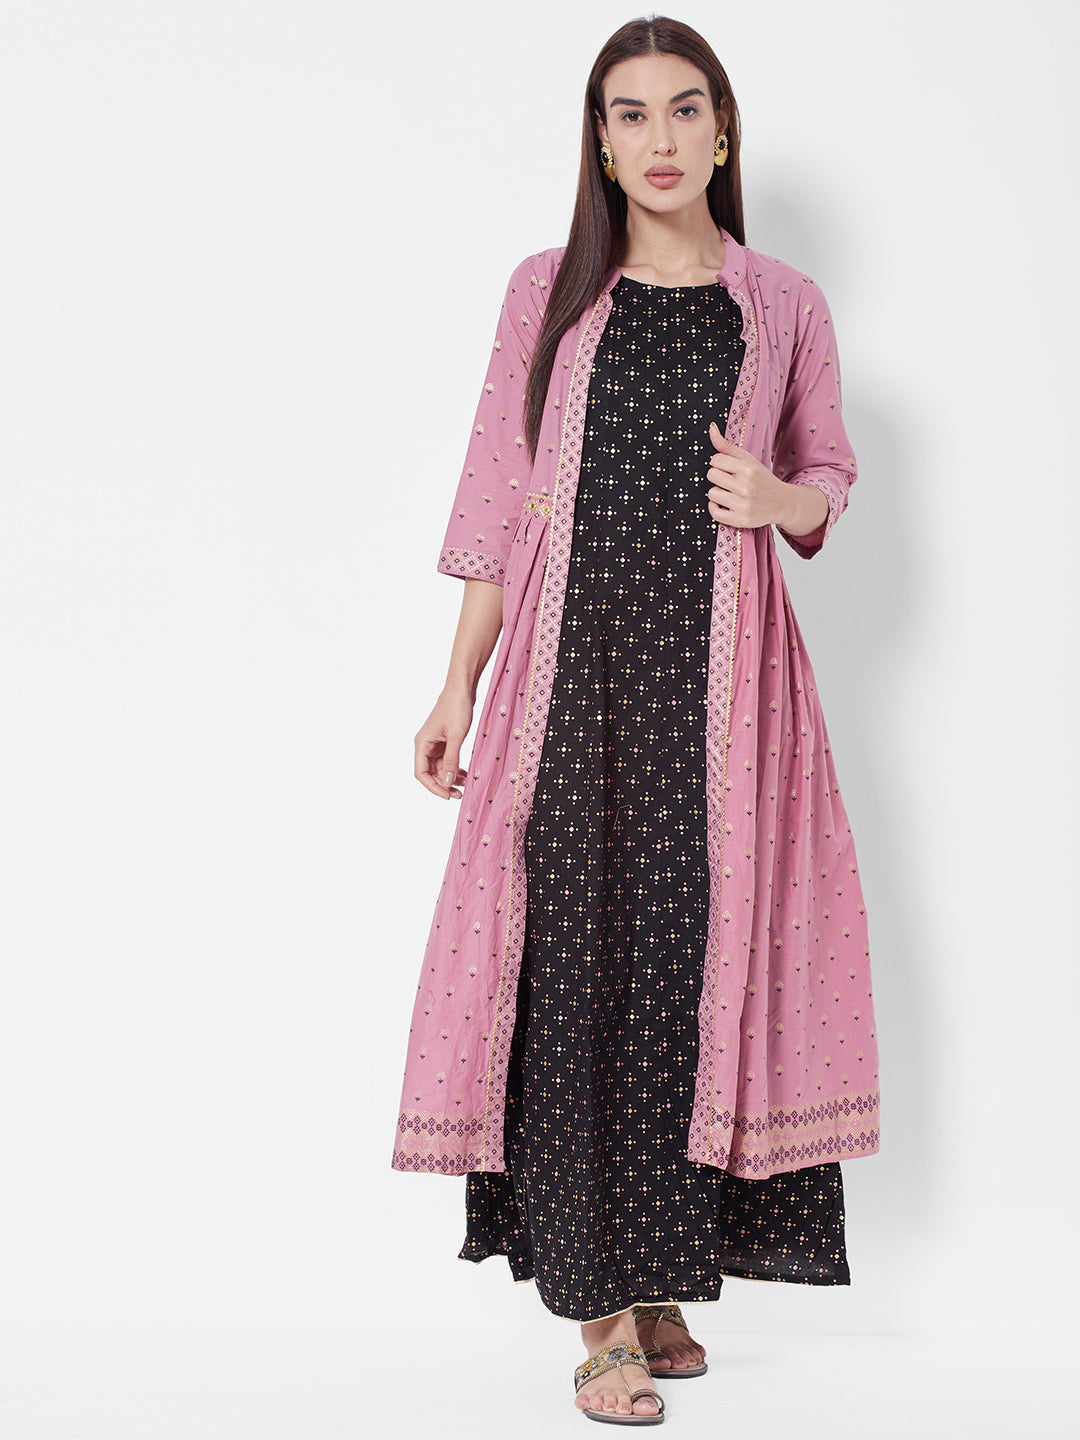 Vedic Ethnic Motifs Printed Cotton Maxi Dress With Long Shrug